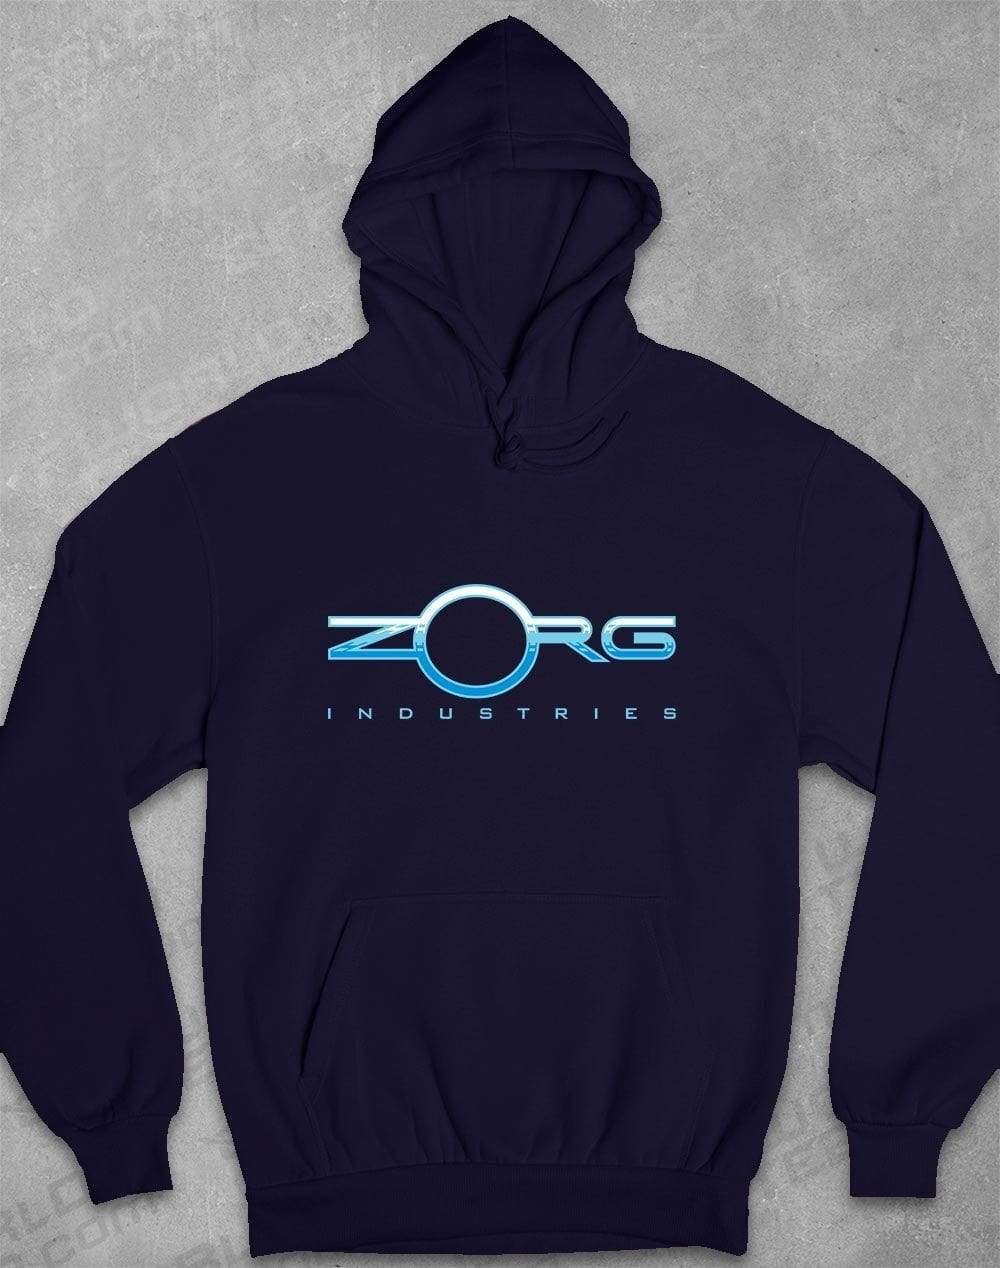 Zorg Industries Hoodie S / Oxford Navy  - Off World Tees